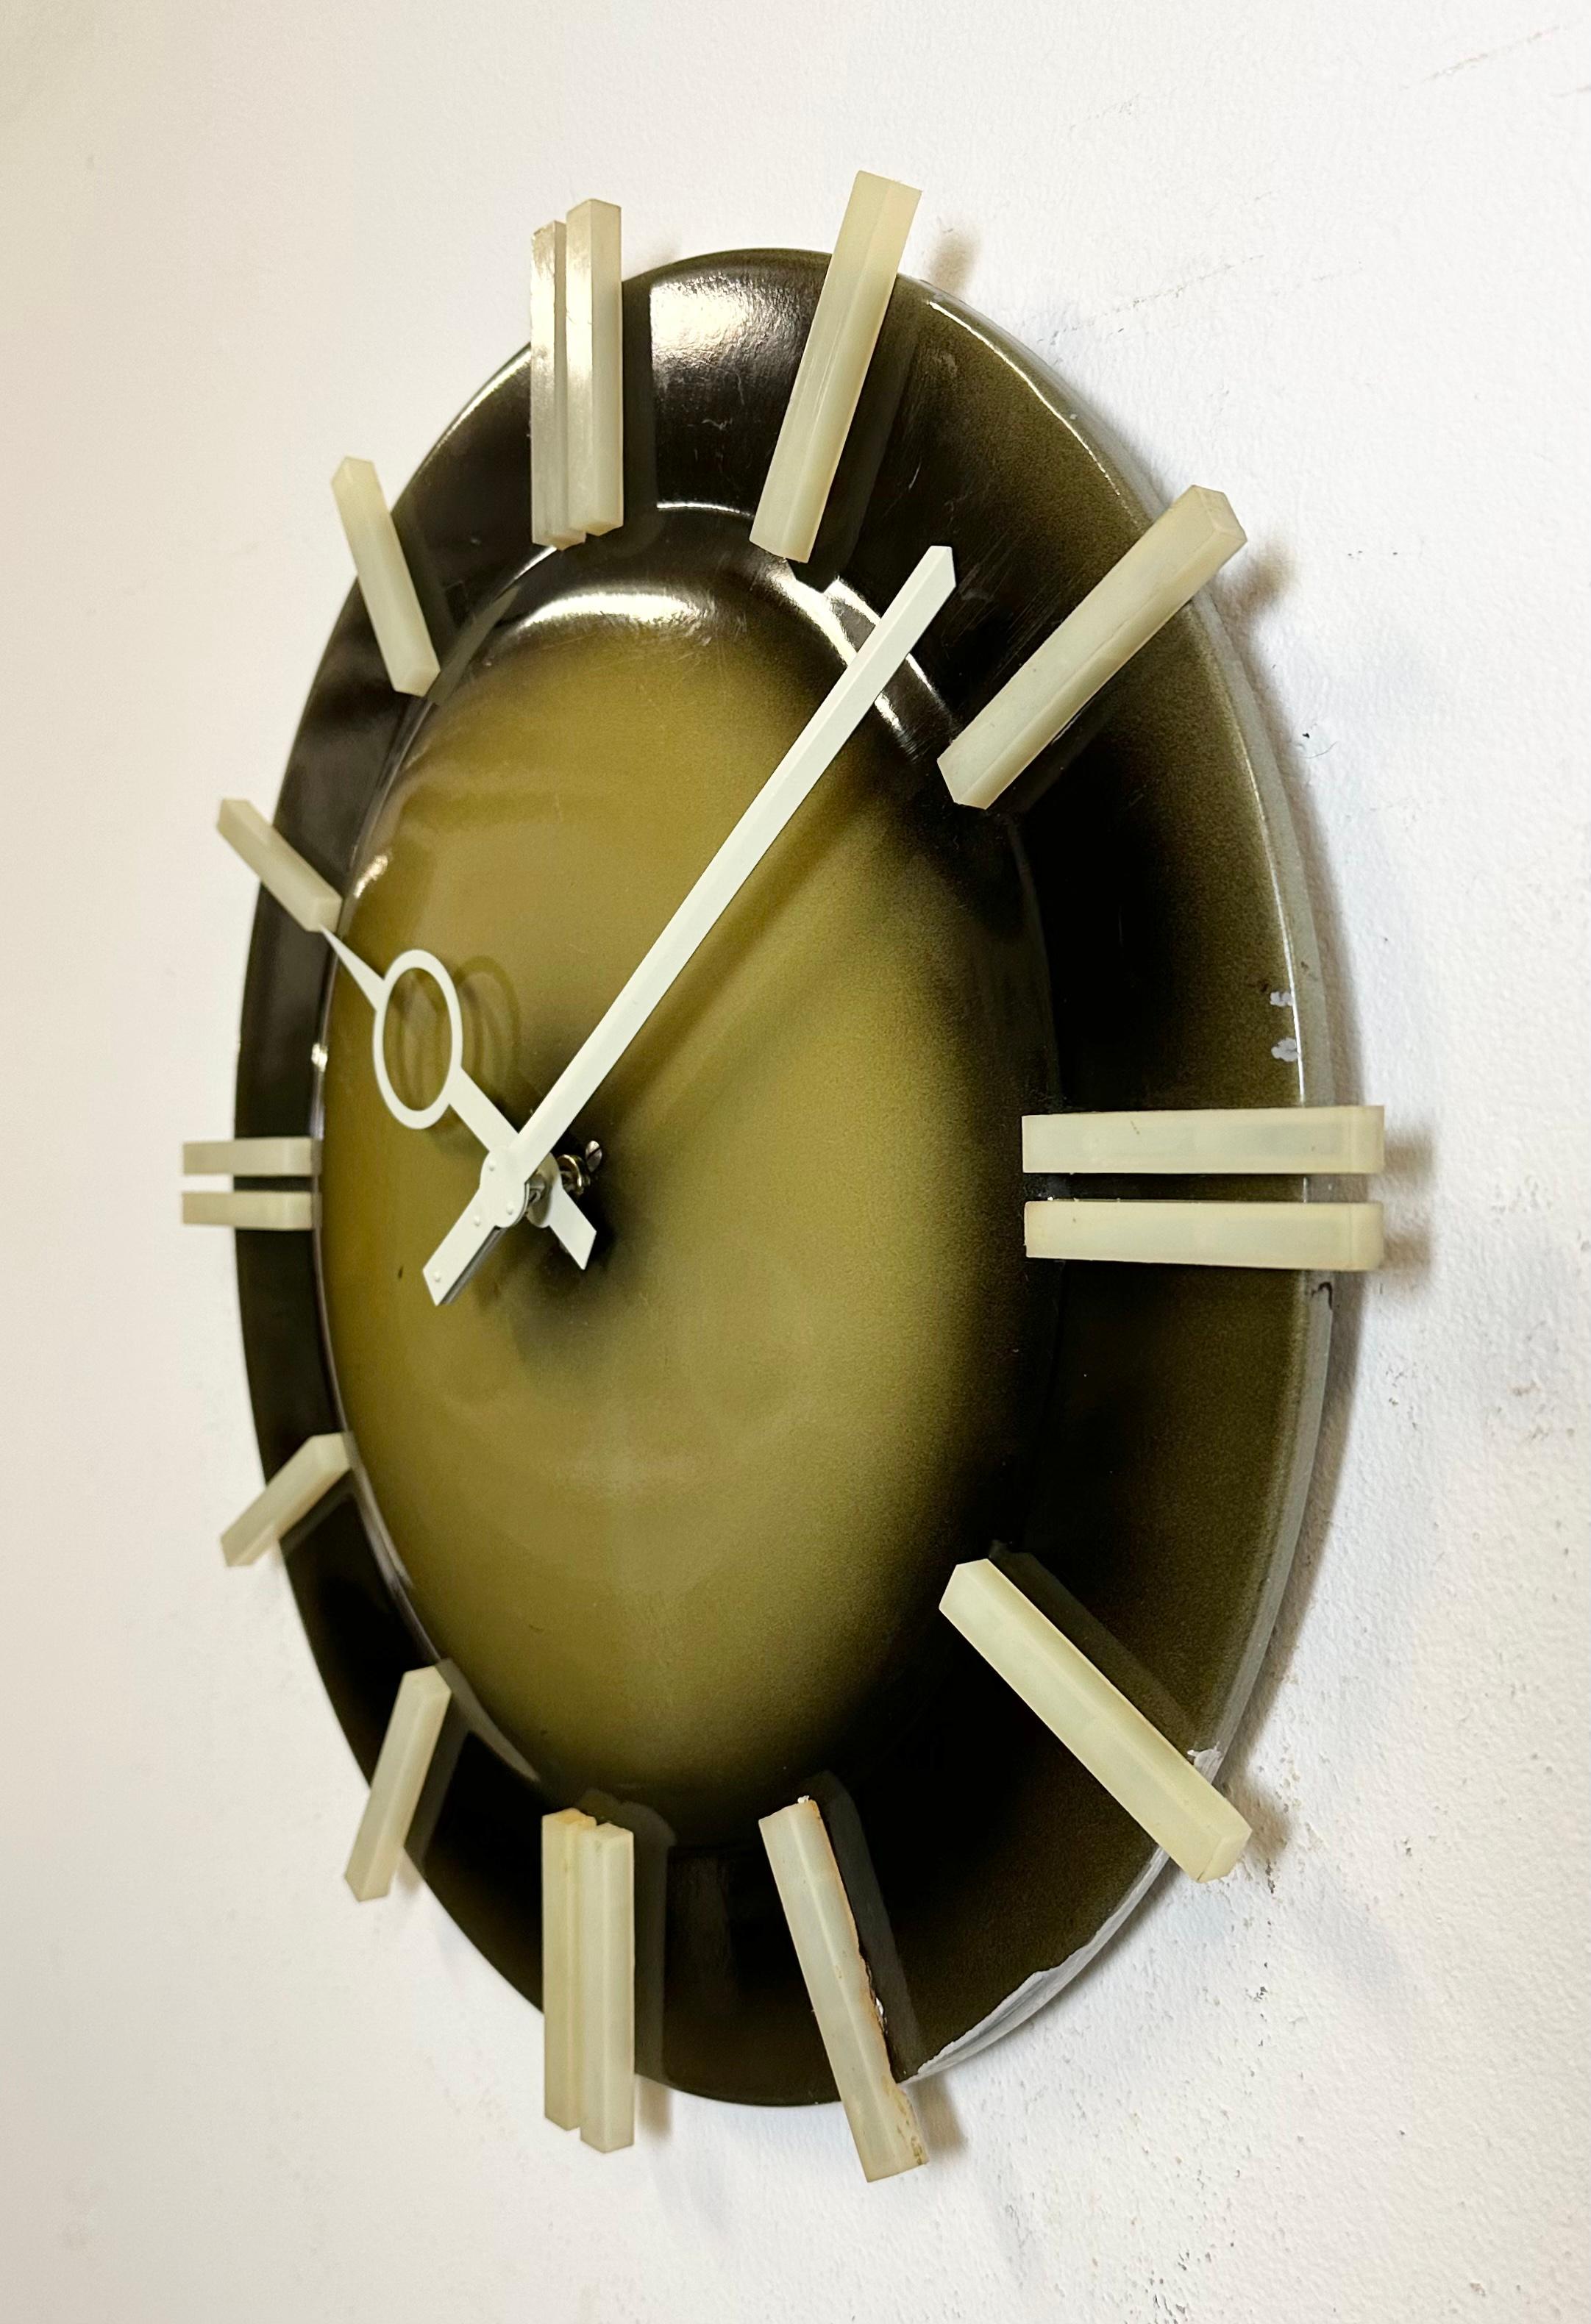 Czech Industrial Office Wall Clock from Pragotron, 1970s For Sale